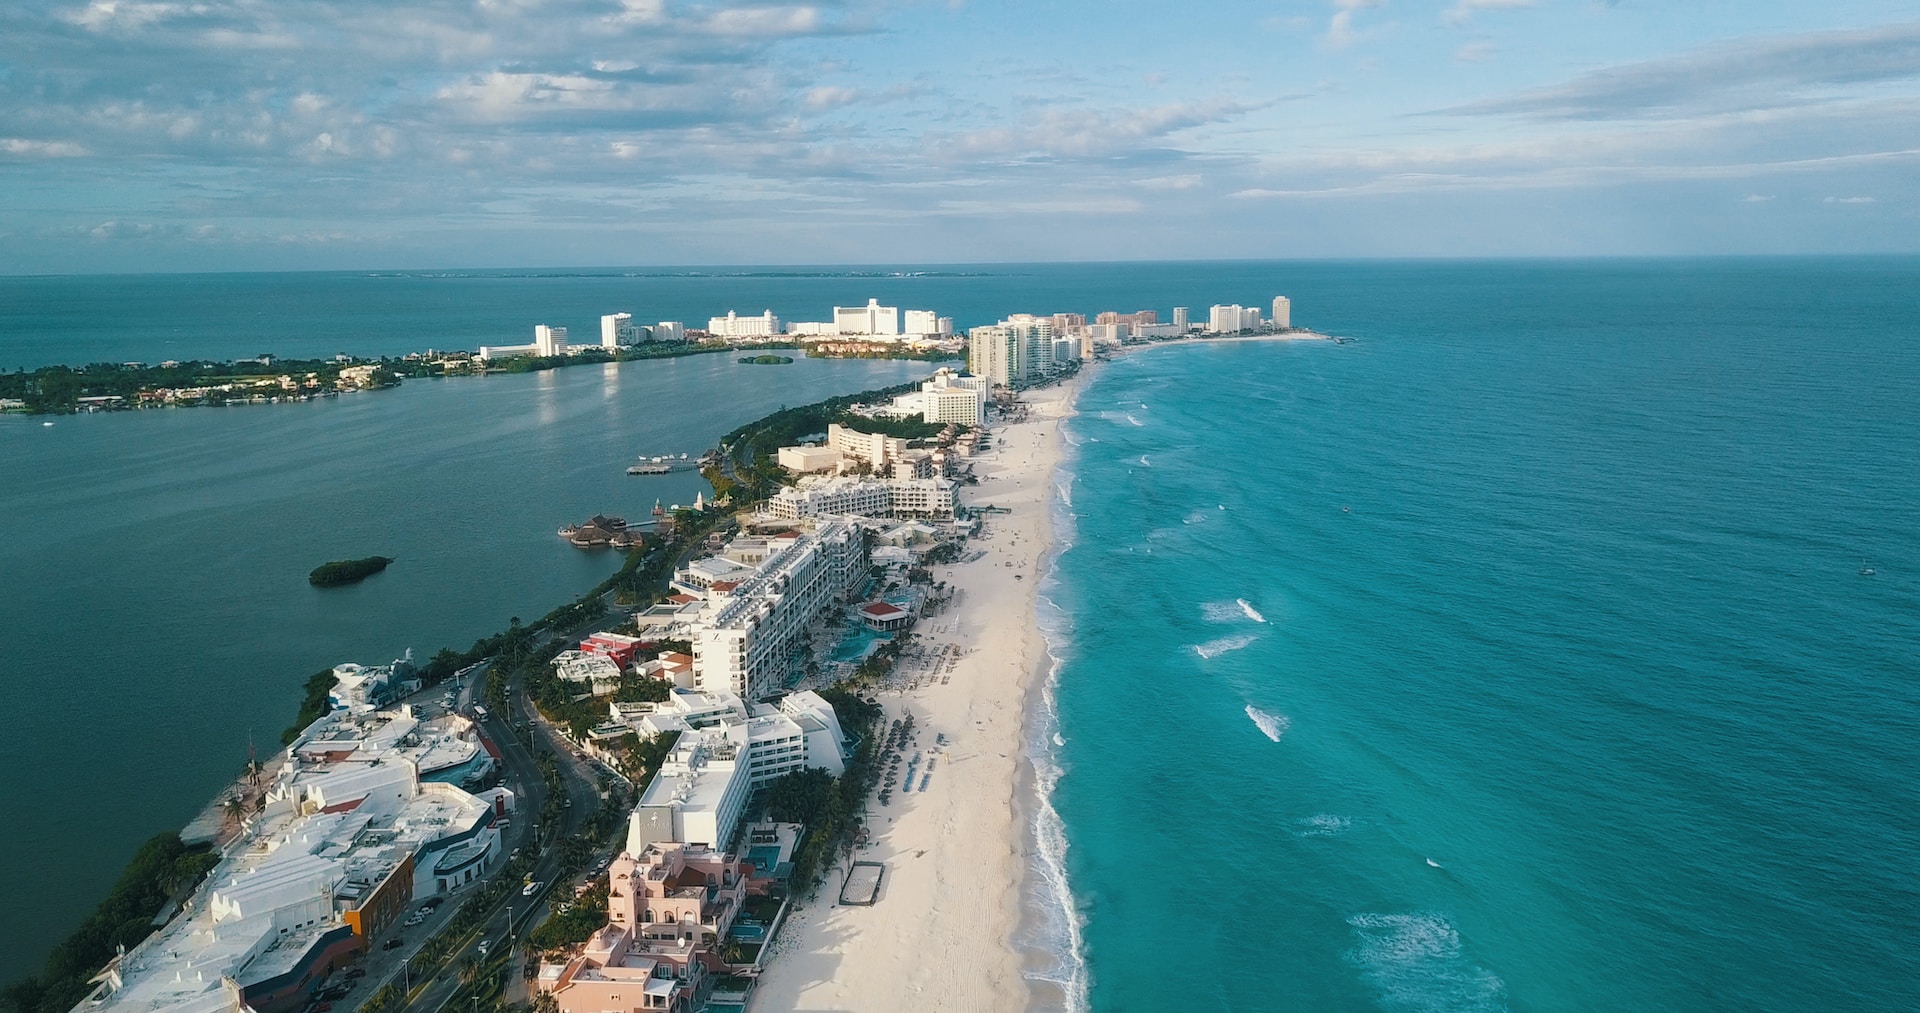 Ariel view of Cancun